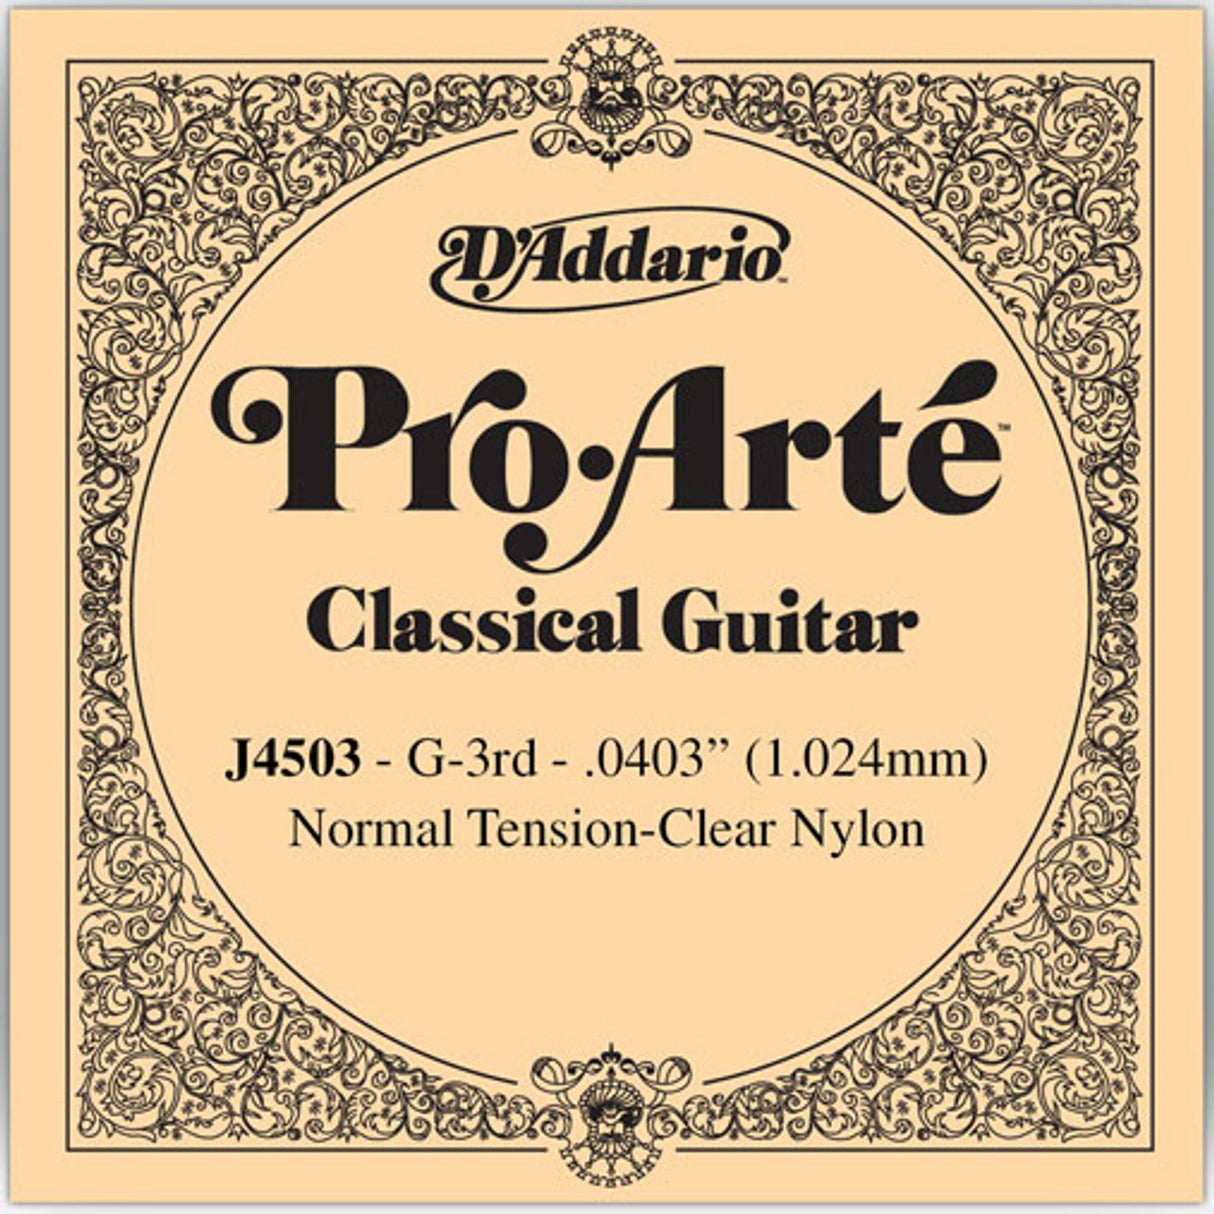 D'Addario Pro Arte Single Classical Guitar Strings - Normal Tension G 3rd